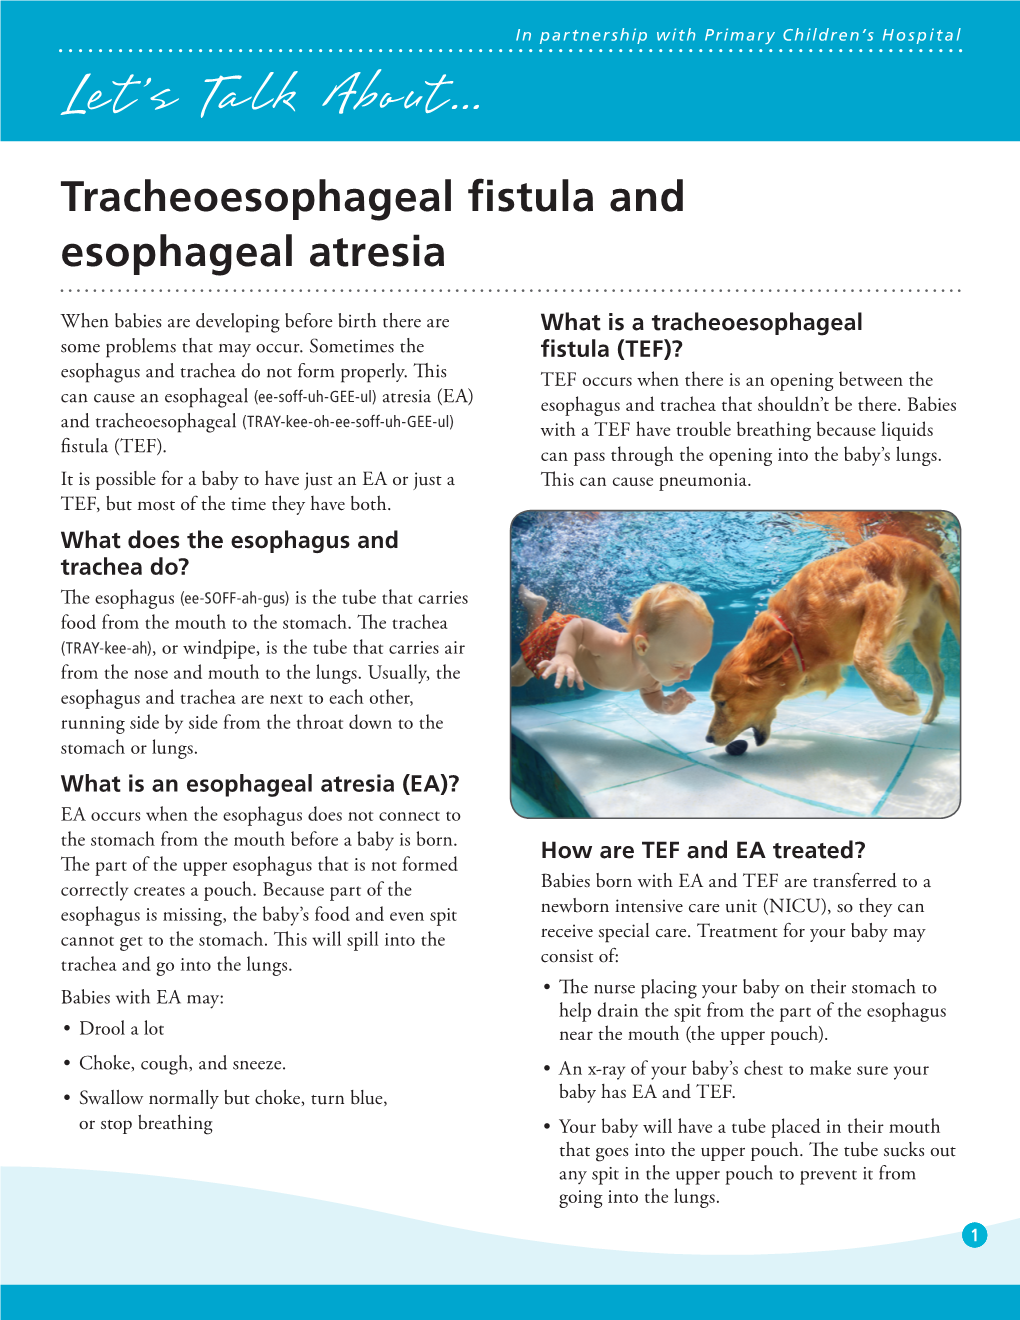 Tracheoesophageal Fistula and Esophageal Atresia